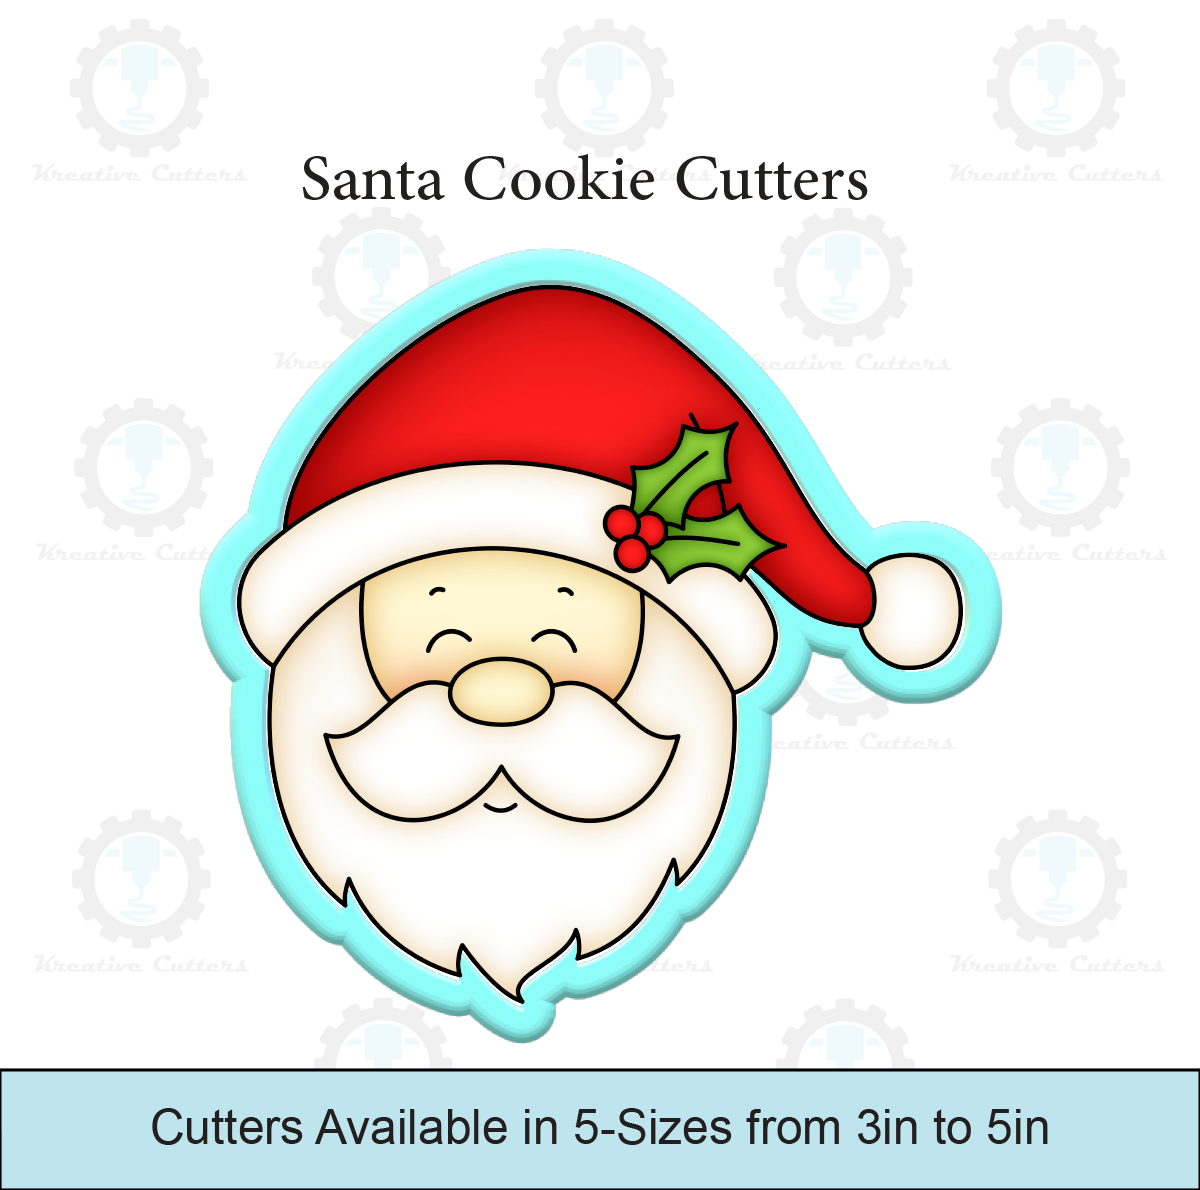 Santa Cookie Cutters